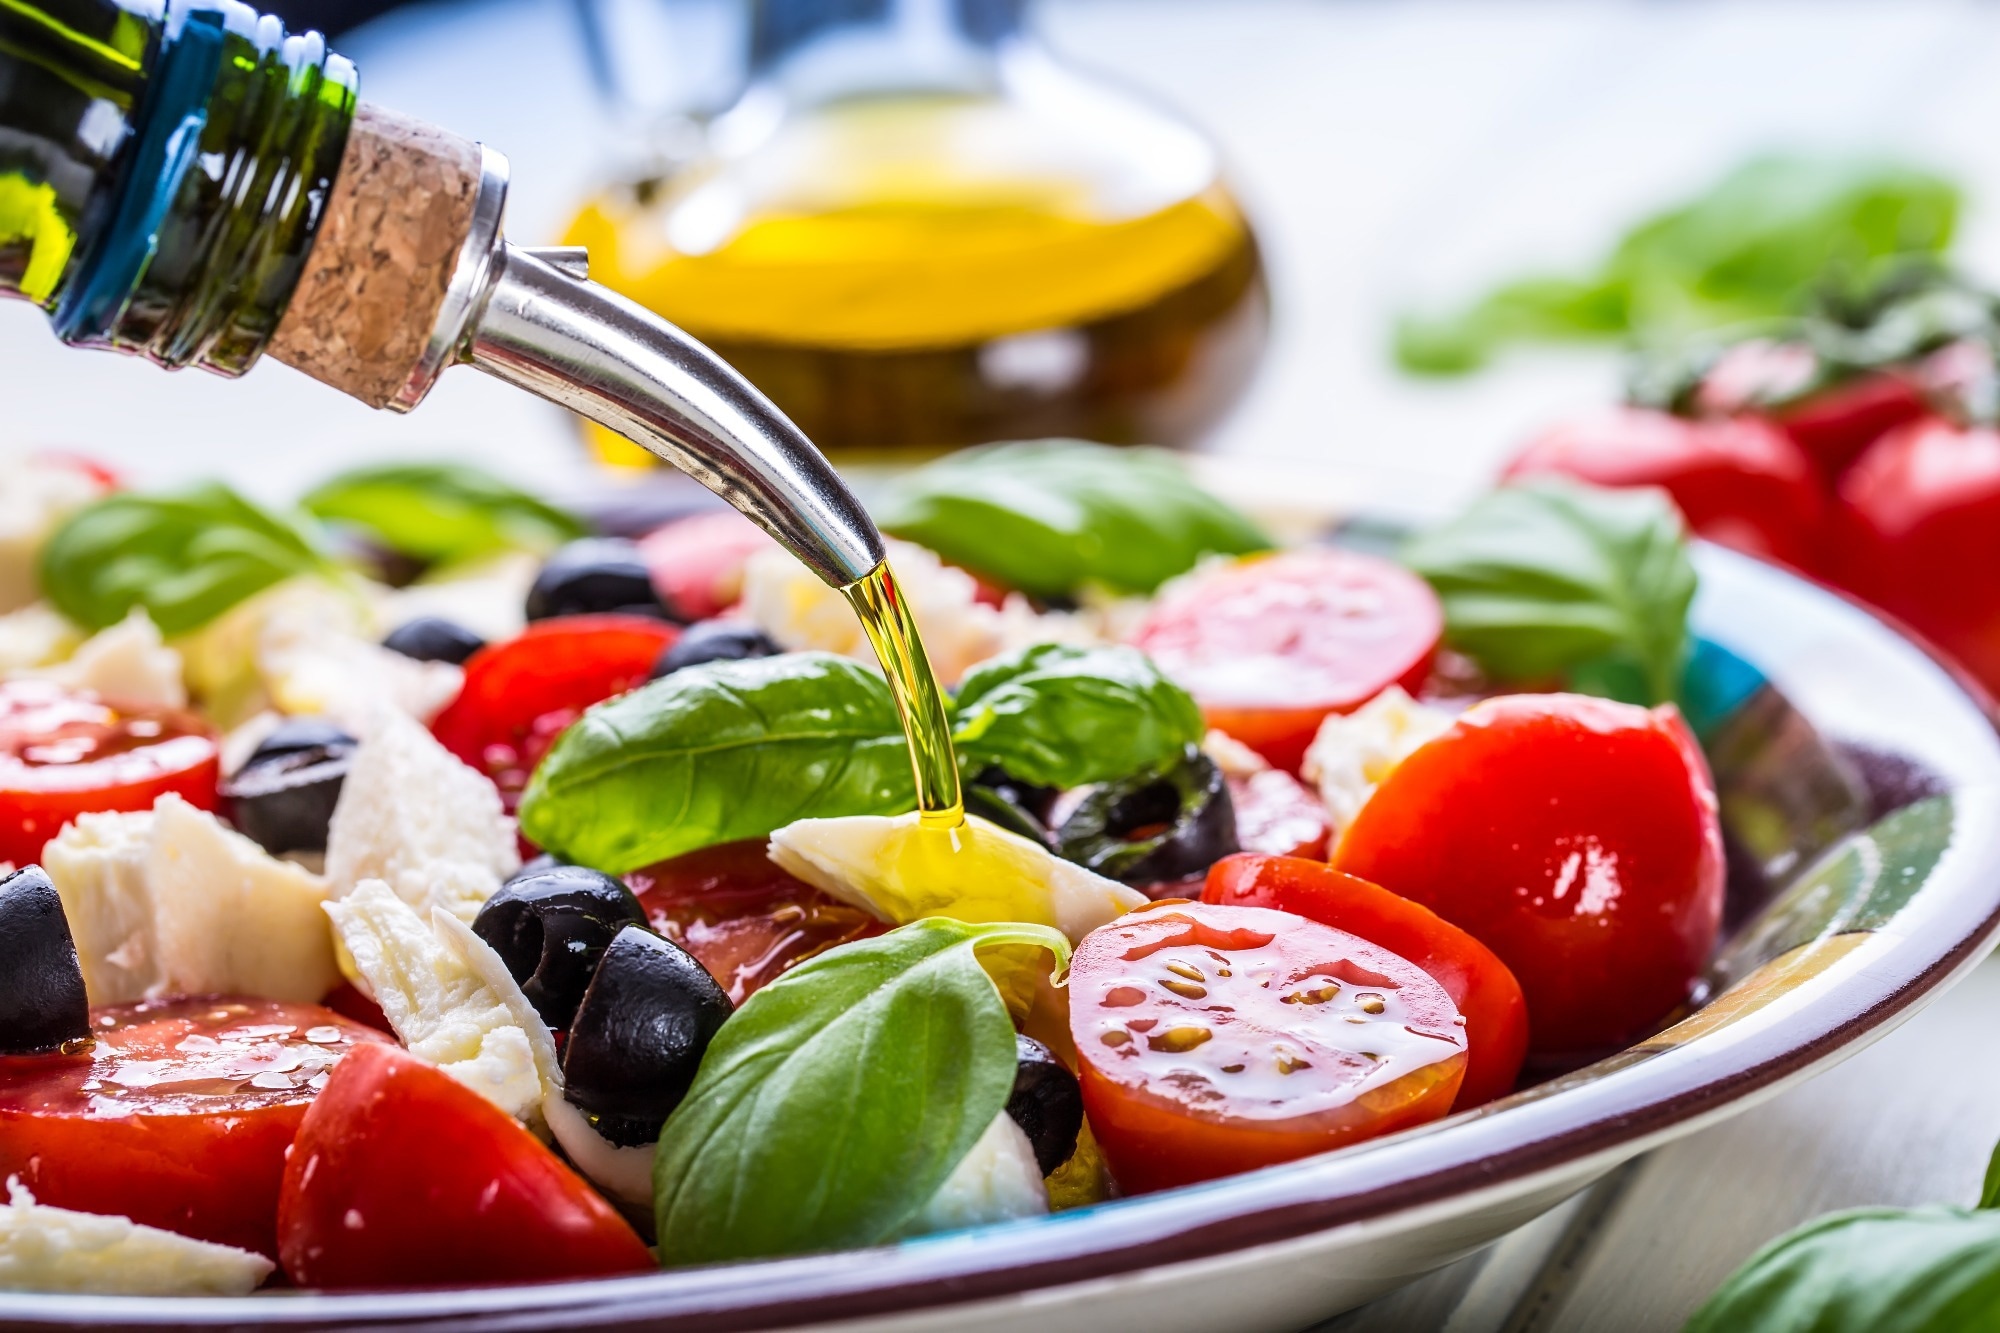 Study: Adherence to Mediterranean Diet: A Population-Based Longitudinal Cohort Study. Image Credit: MarianWeyo/Shutterstock.com